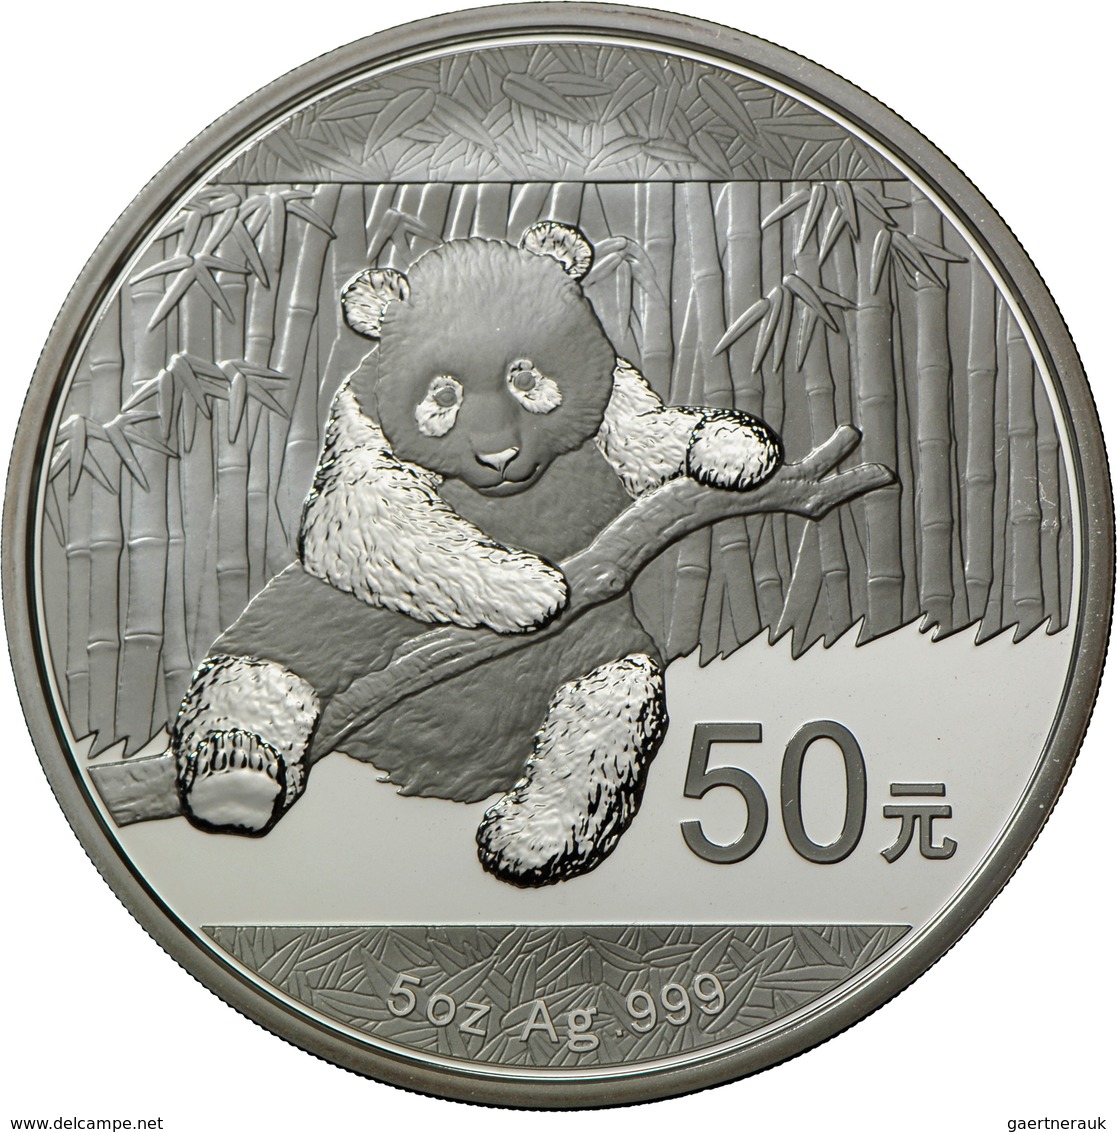 China - Volksrepublik: 50 Yuan 2014, Silber Panda, 5 OZ 999/1000 Silber. Inklusive Zertifikat, Etui - China